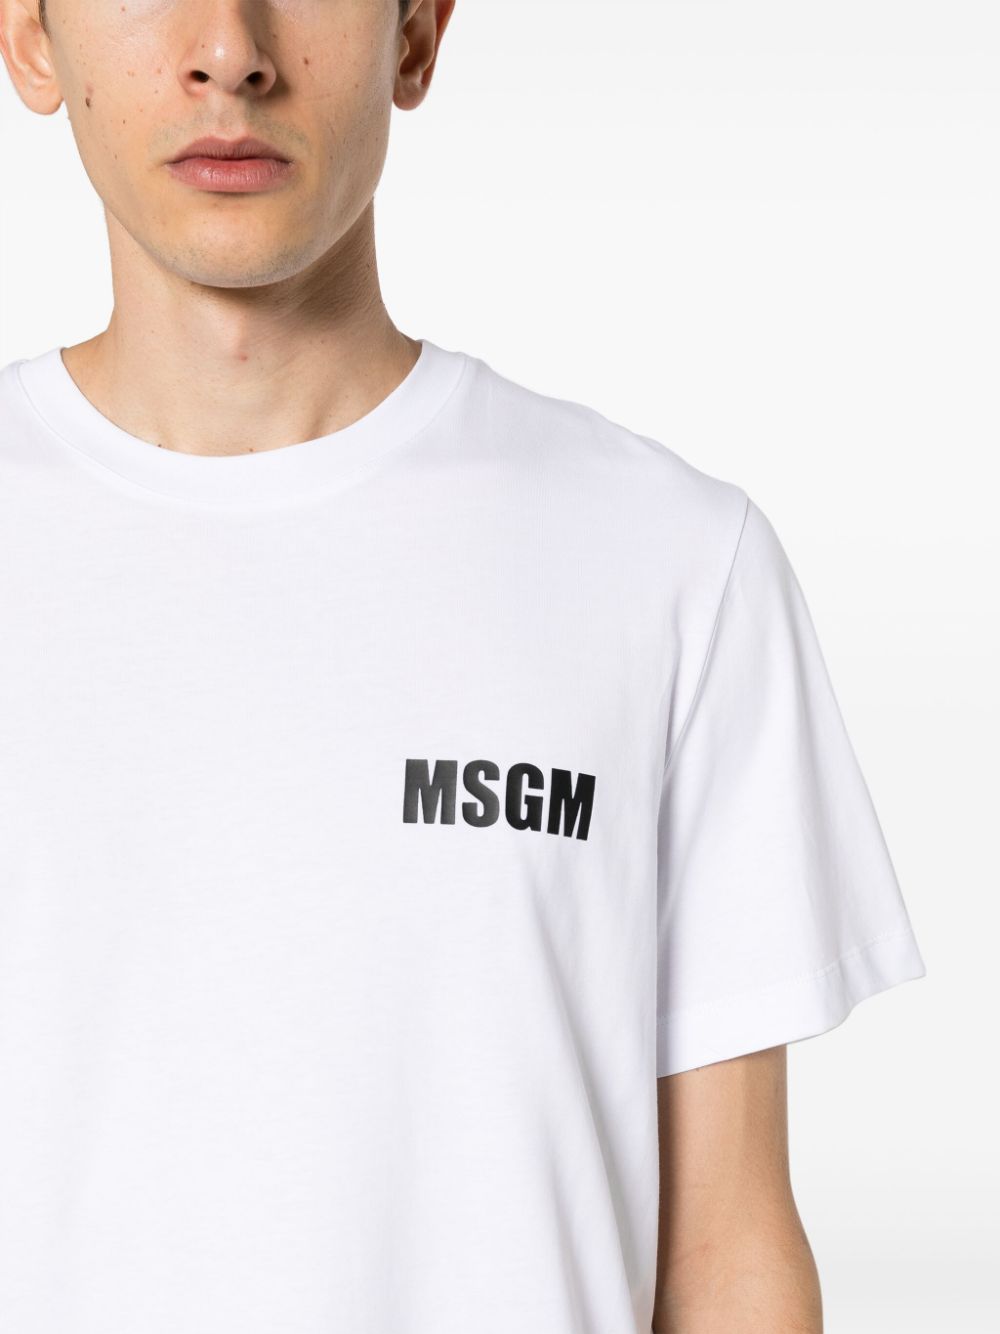 T-shirt in cotone con stampa logo<br><br><br>